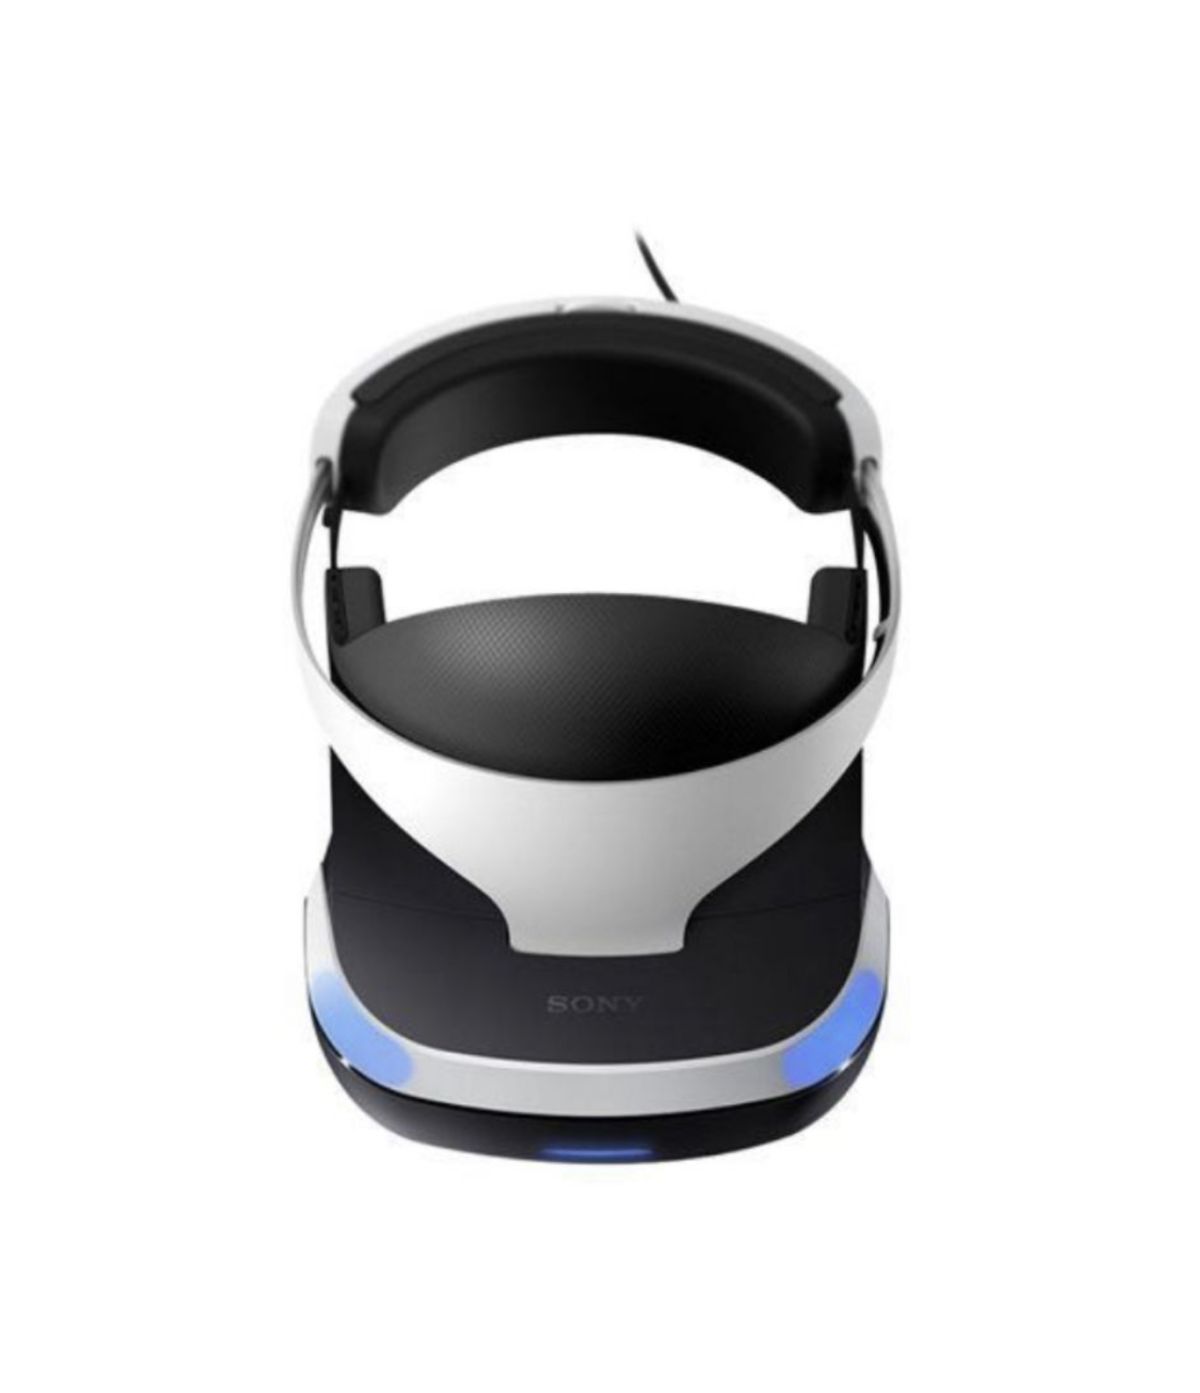 Sony Playstation VR headset